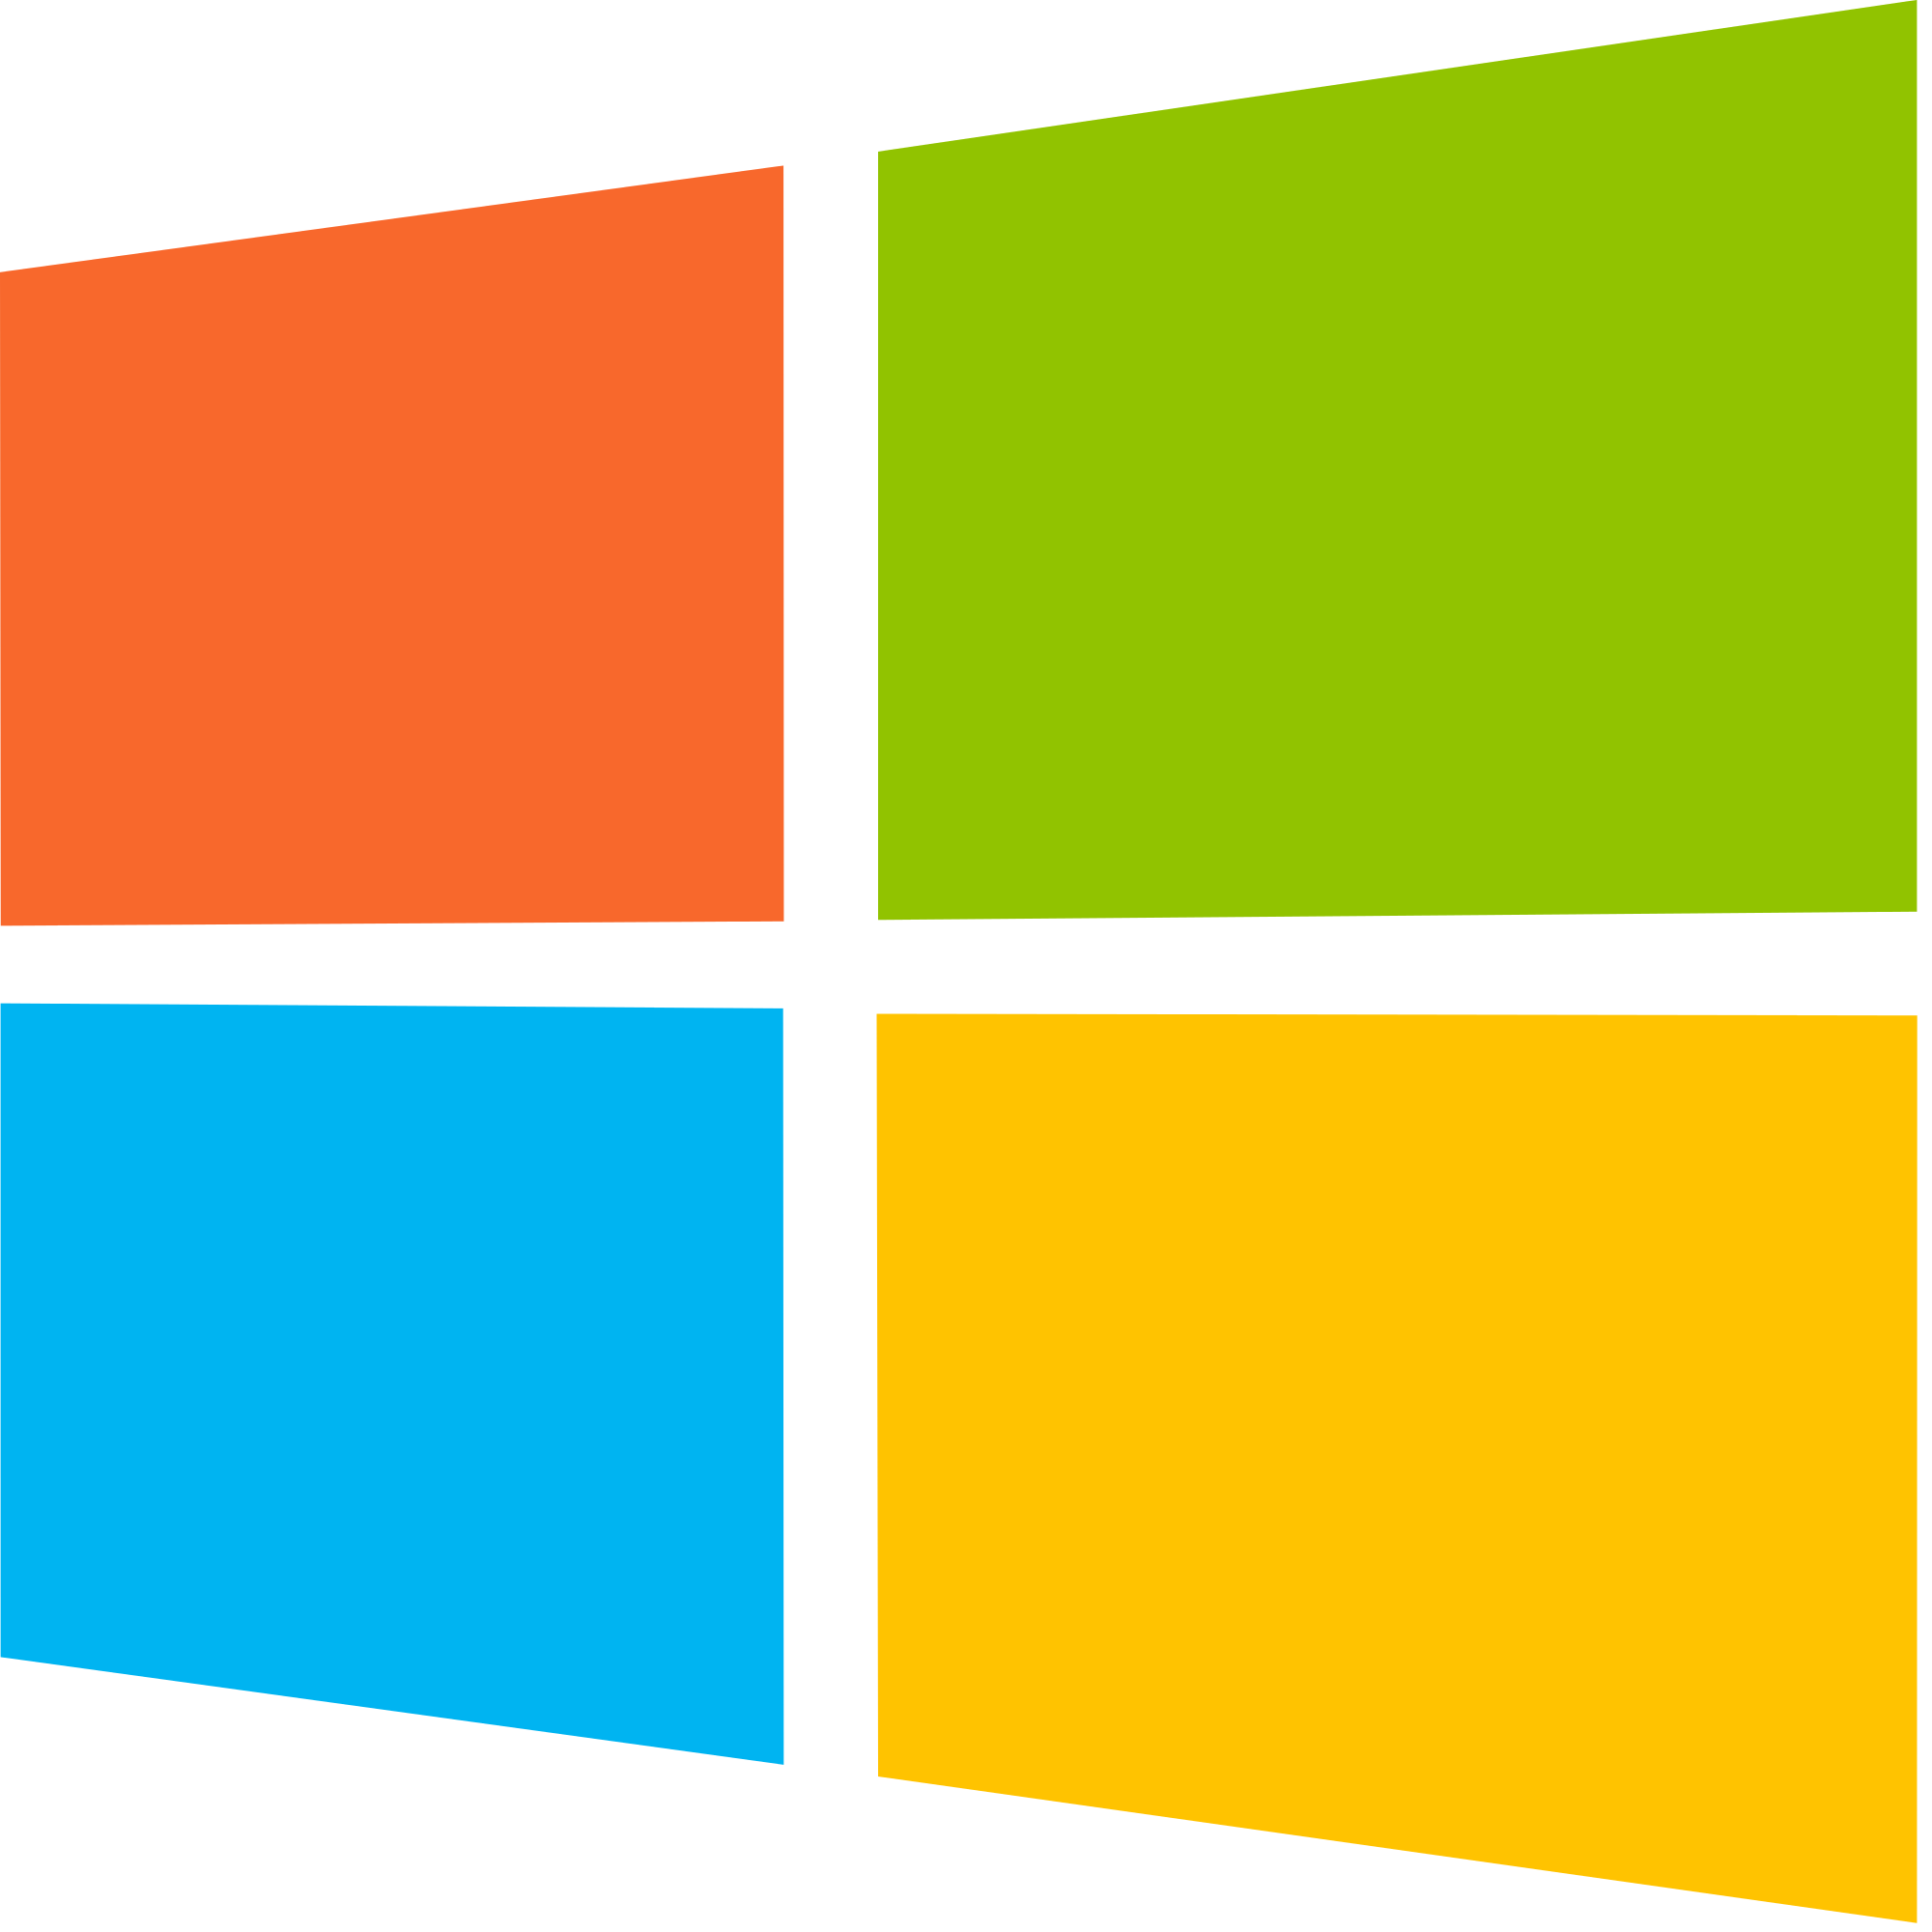 File:Windows logo - 2012 derivative.svg